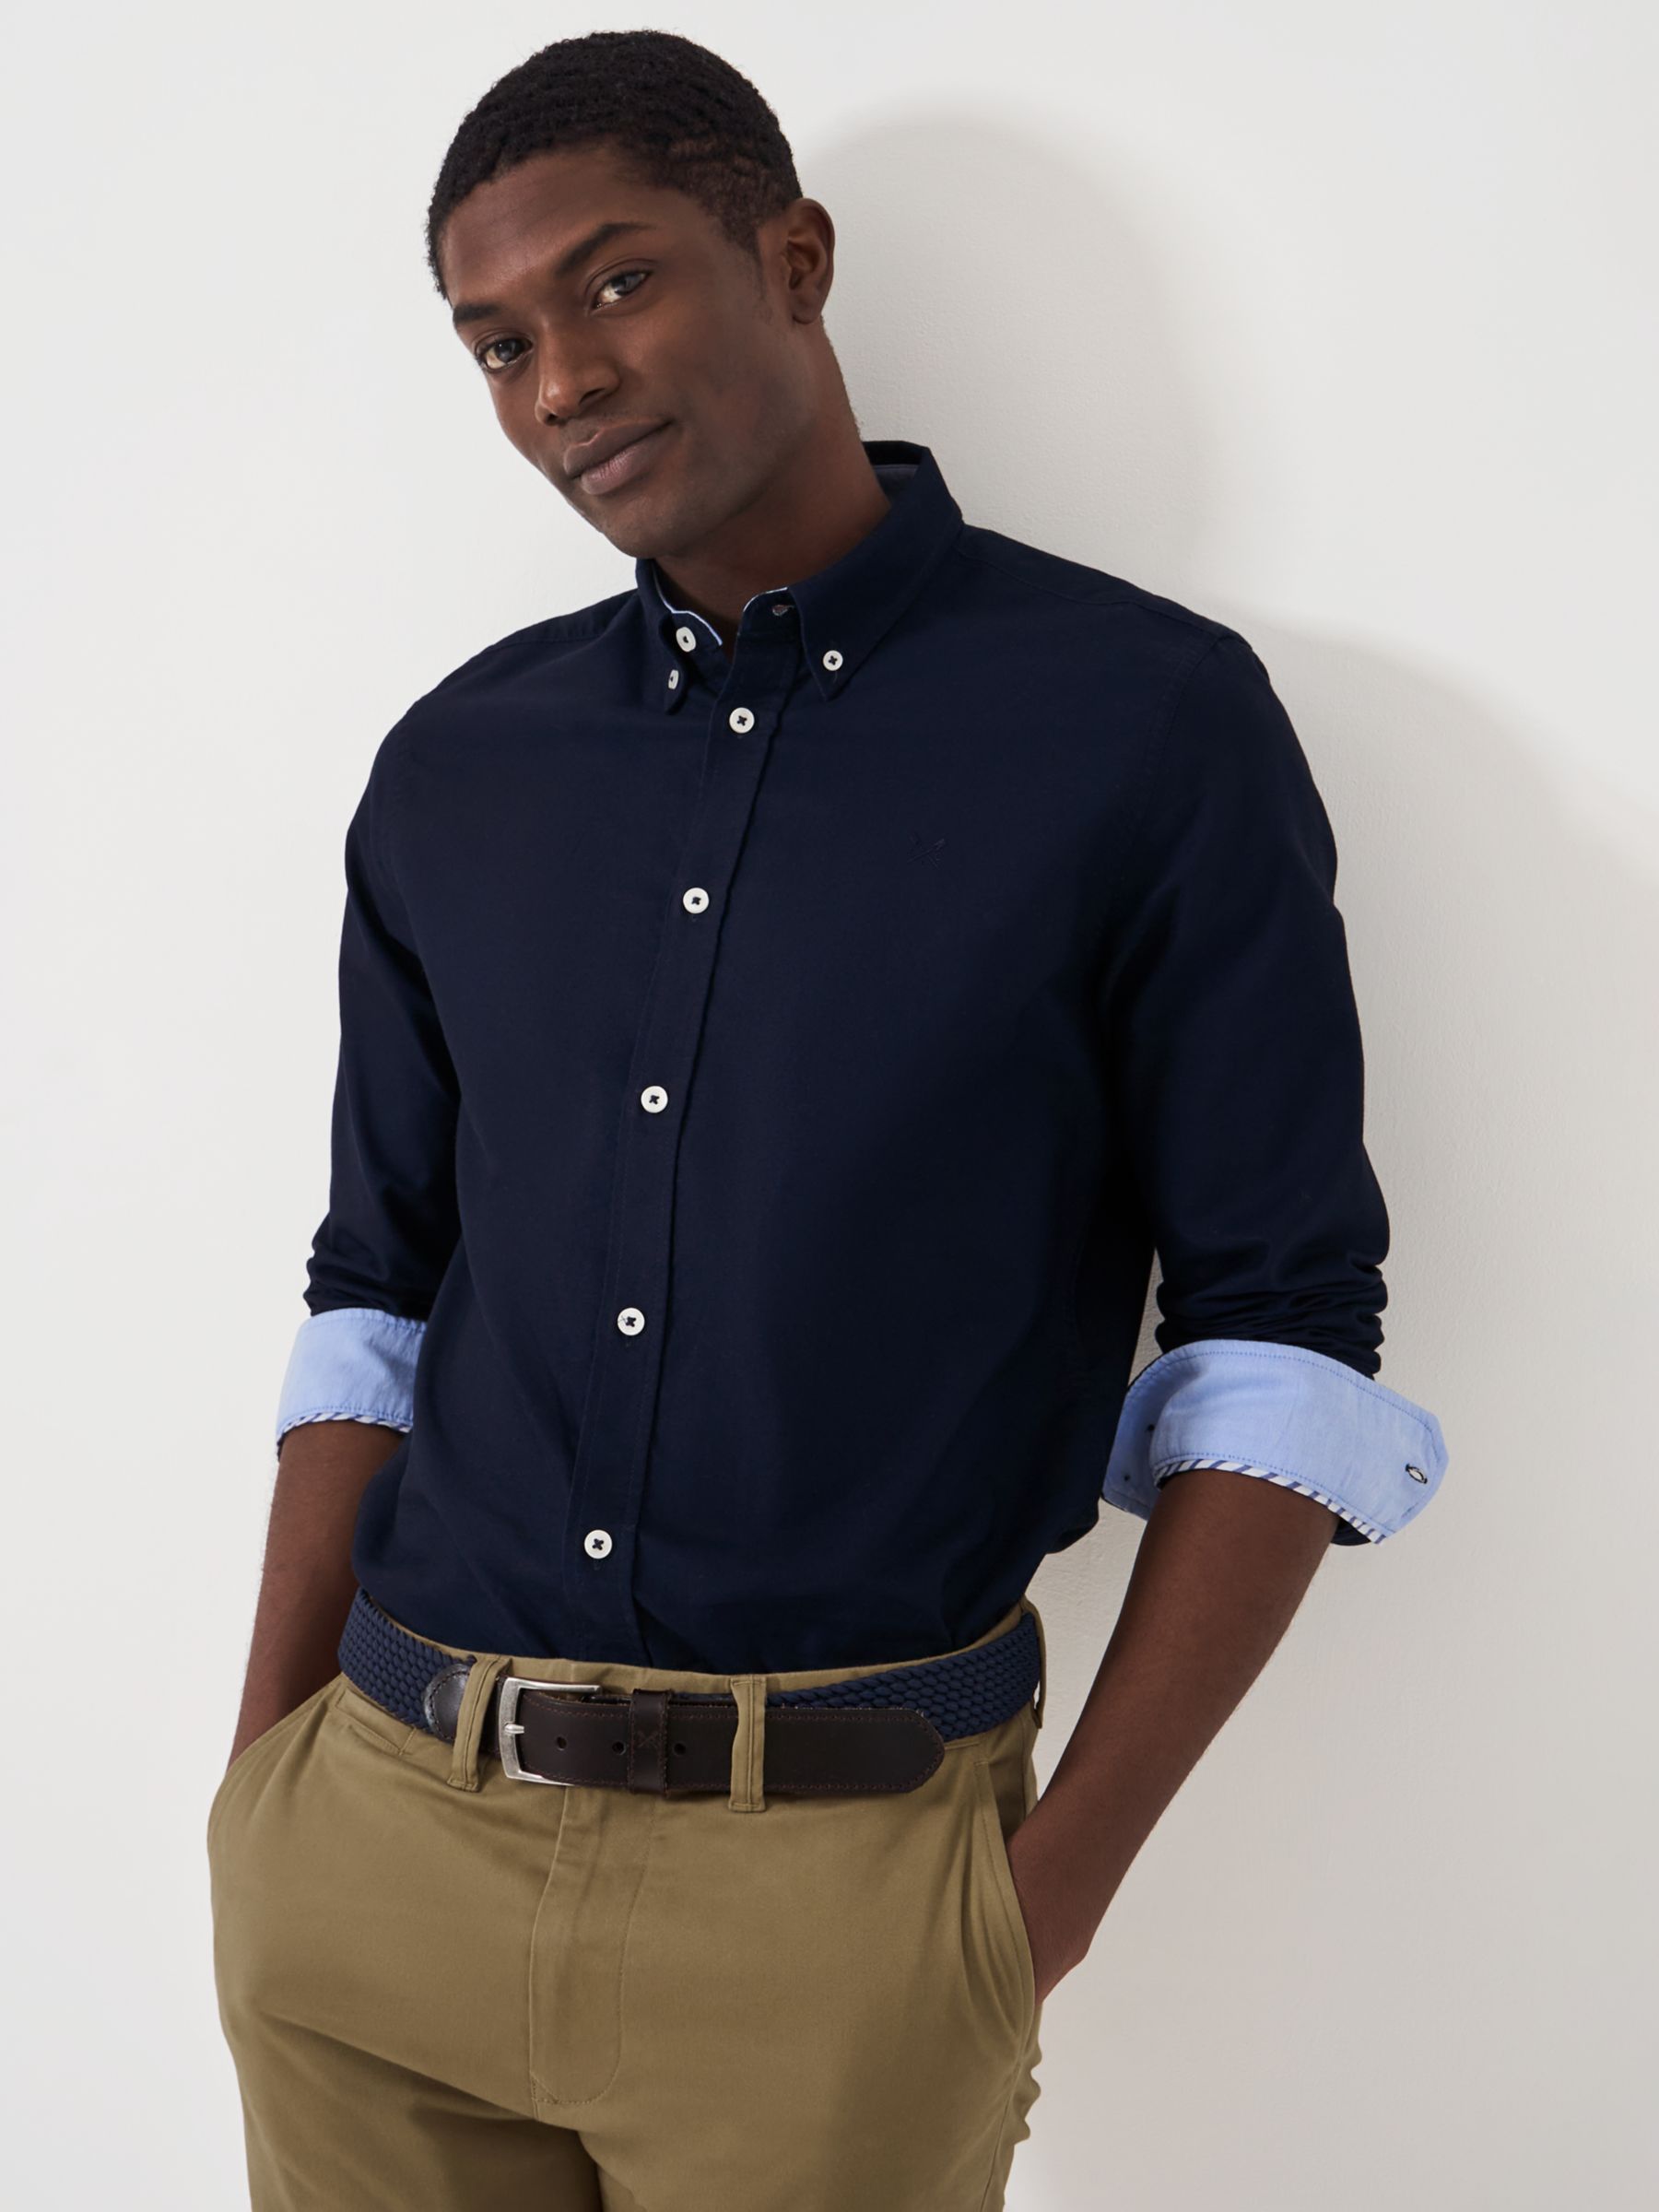 Crew Clothing Slim Fit Oxford Shirt, Dark Blue, S